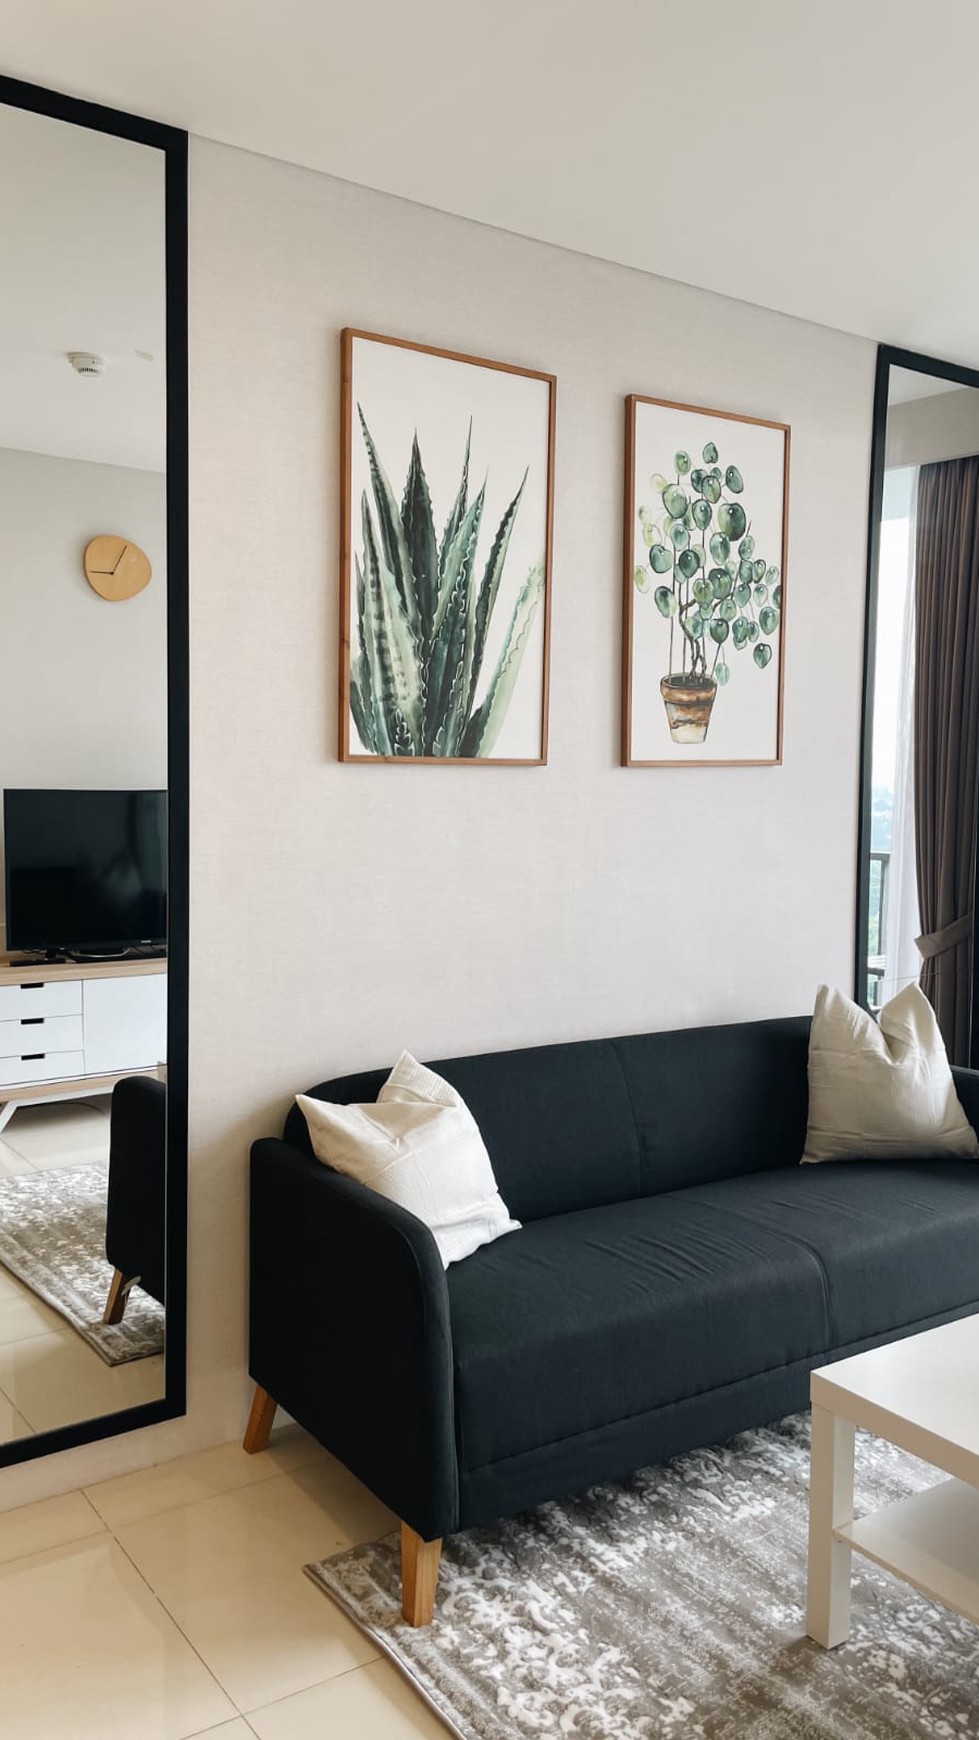 Apartemen cantik full furnish di jakarta selatan